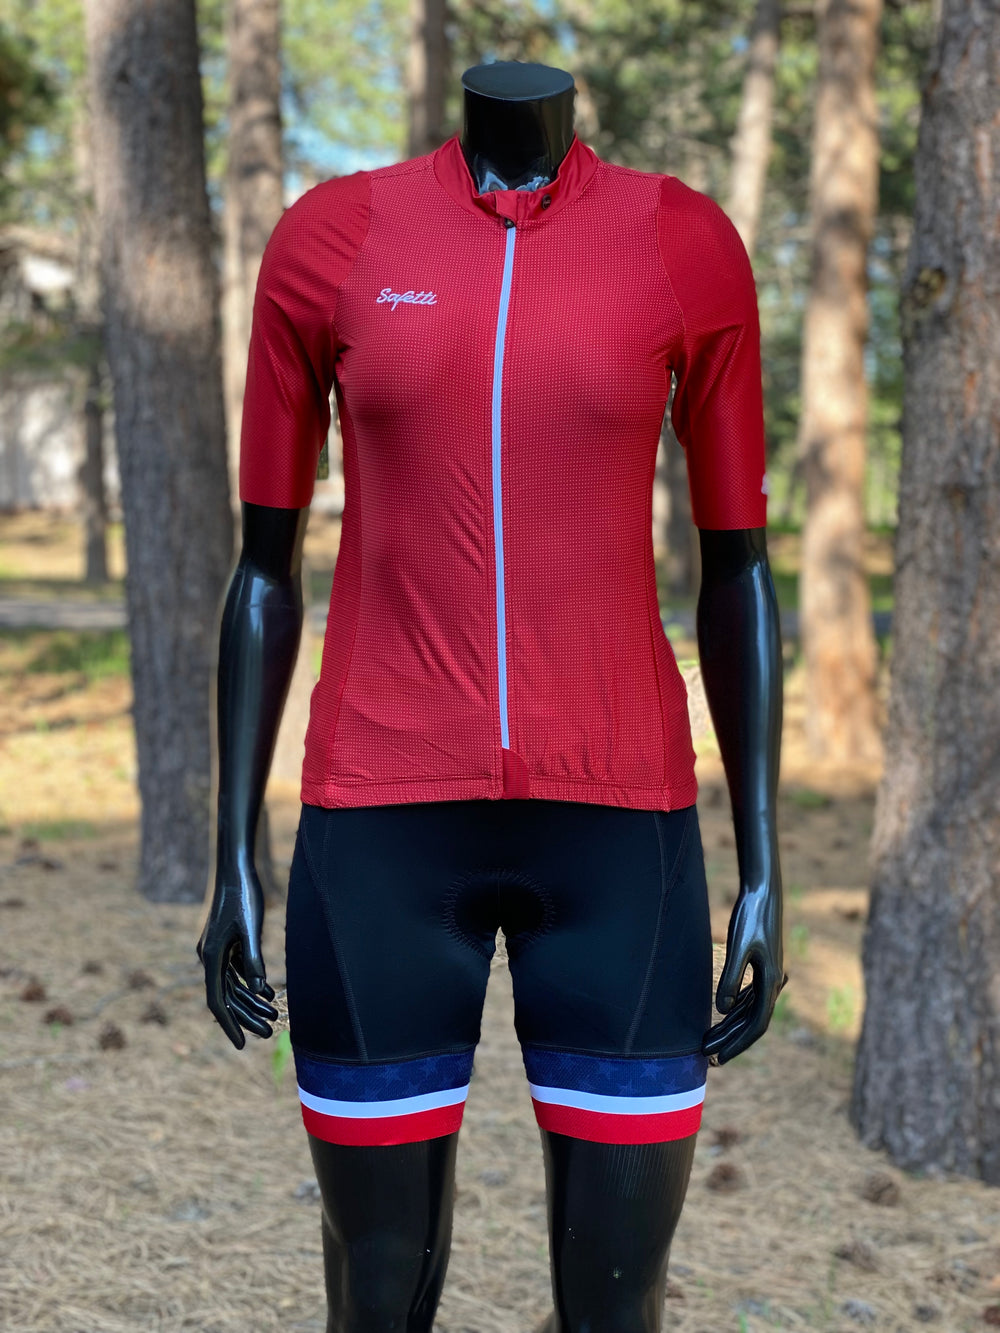 USA Bartali Cycling Shorts. Women